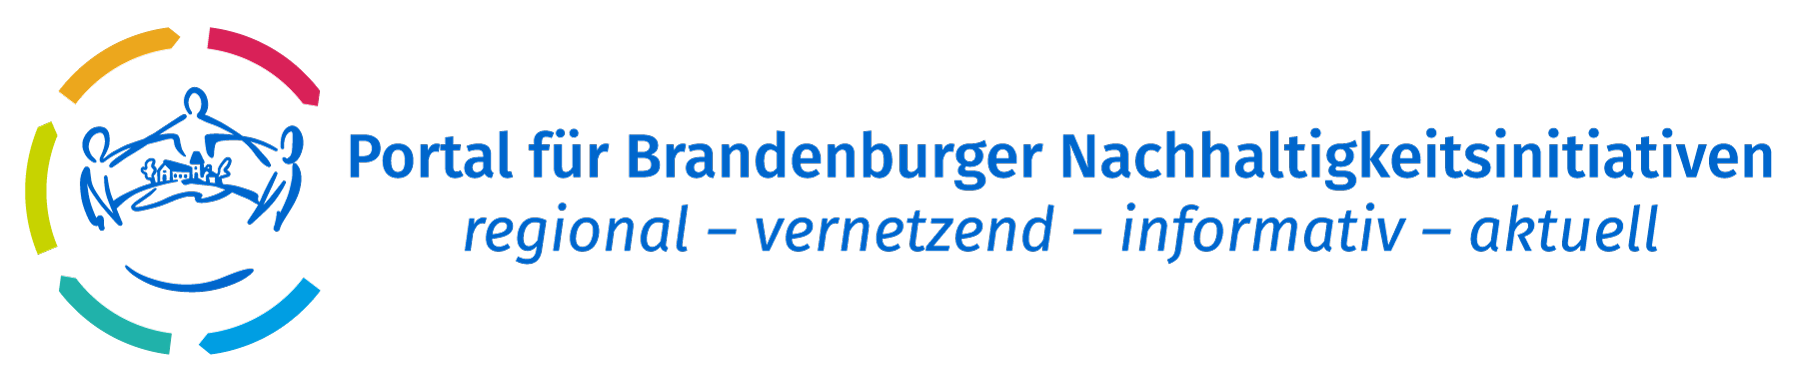 Portal_nachhaltig-in-brandenburg_Logo